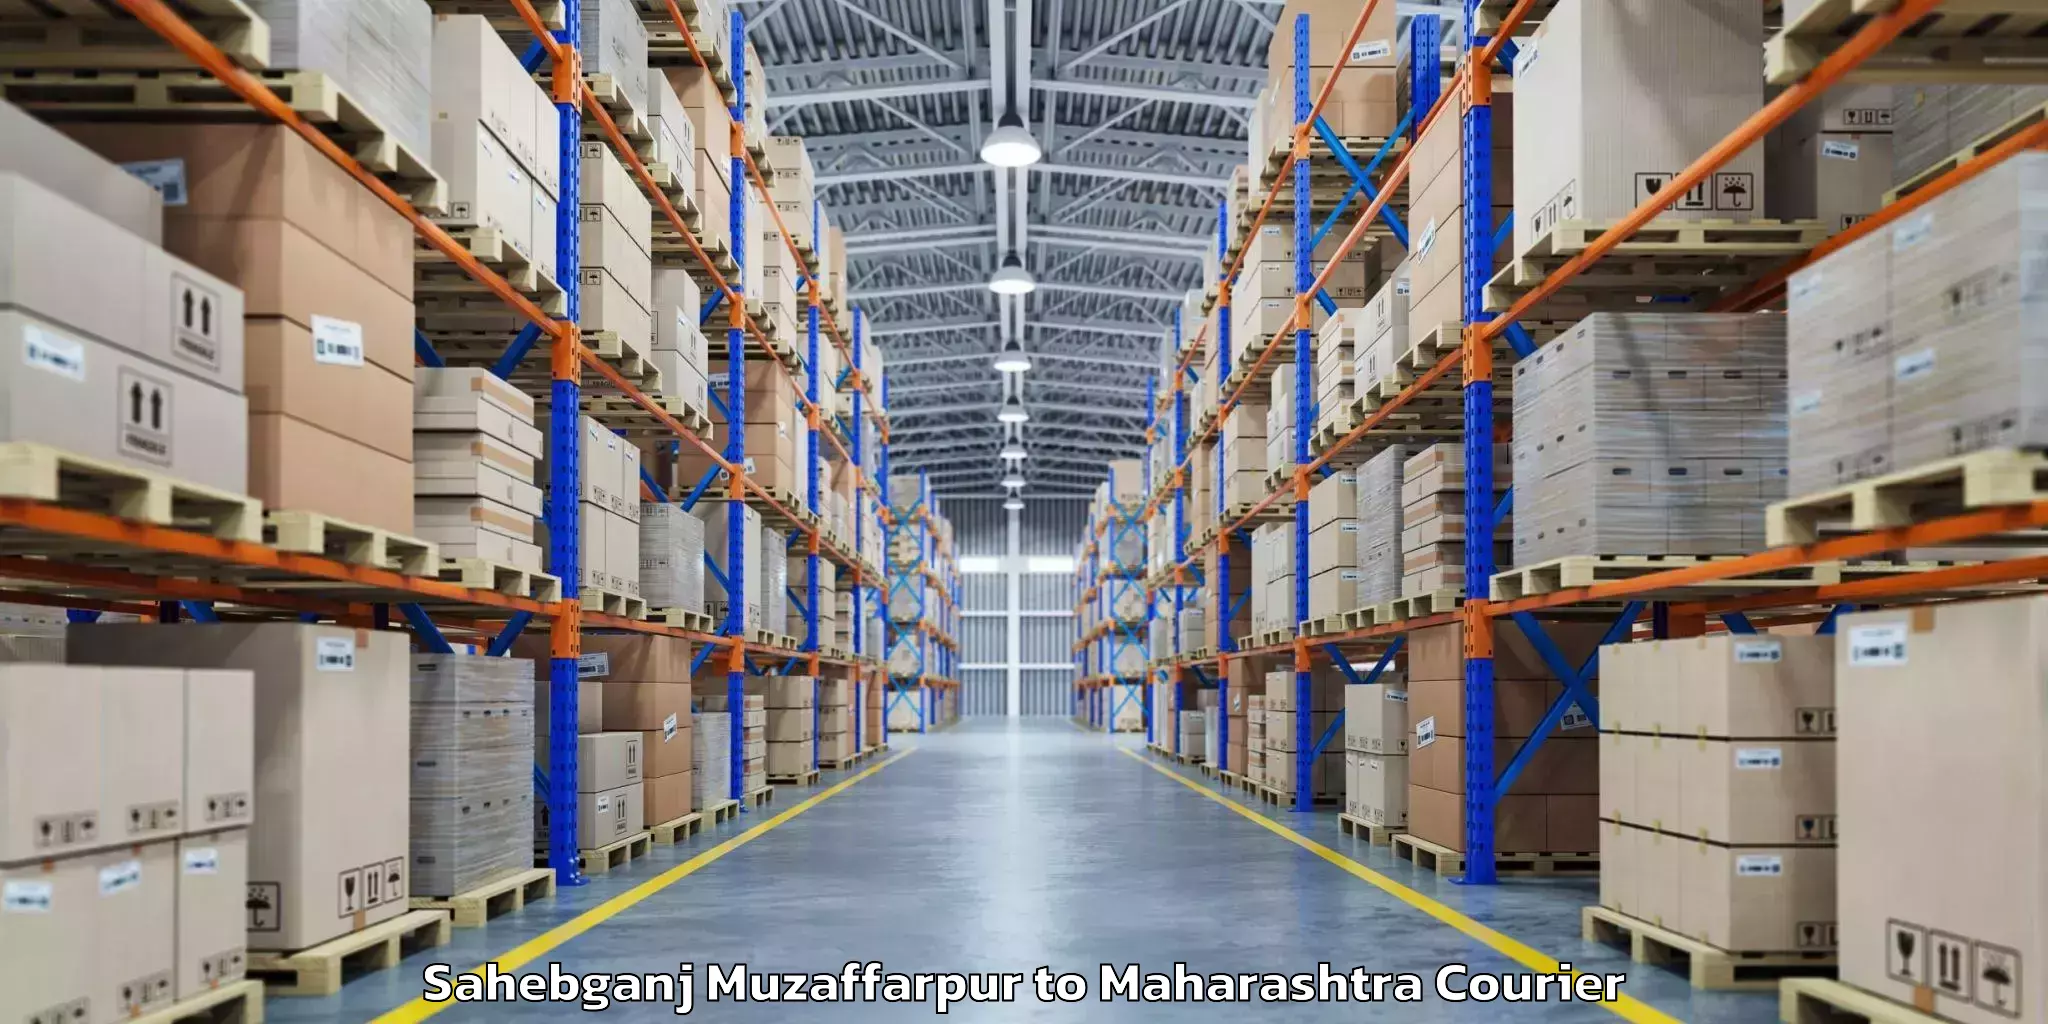 Baggage shipping experts Sahebganj Muzaffarpur to Sakri